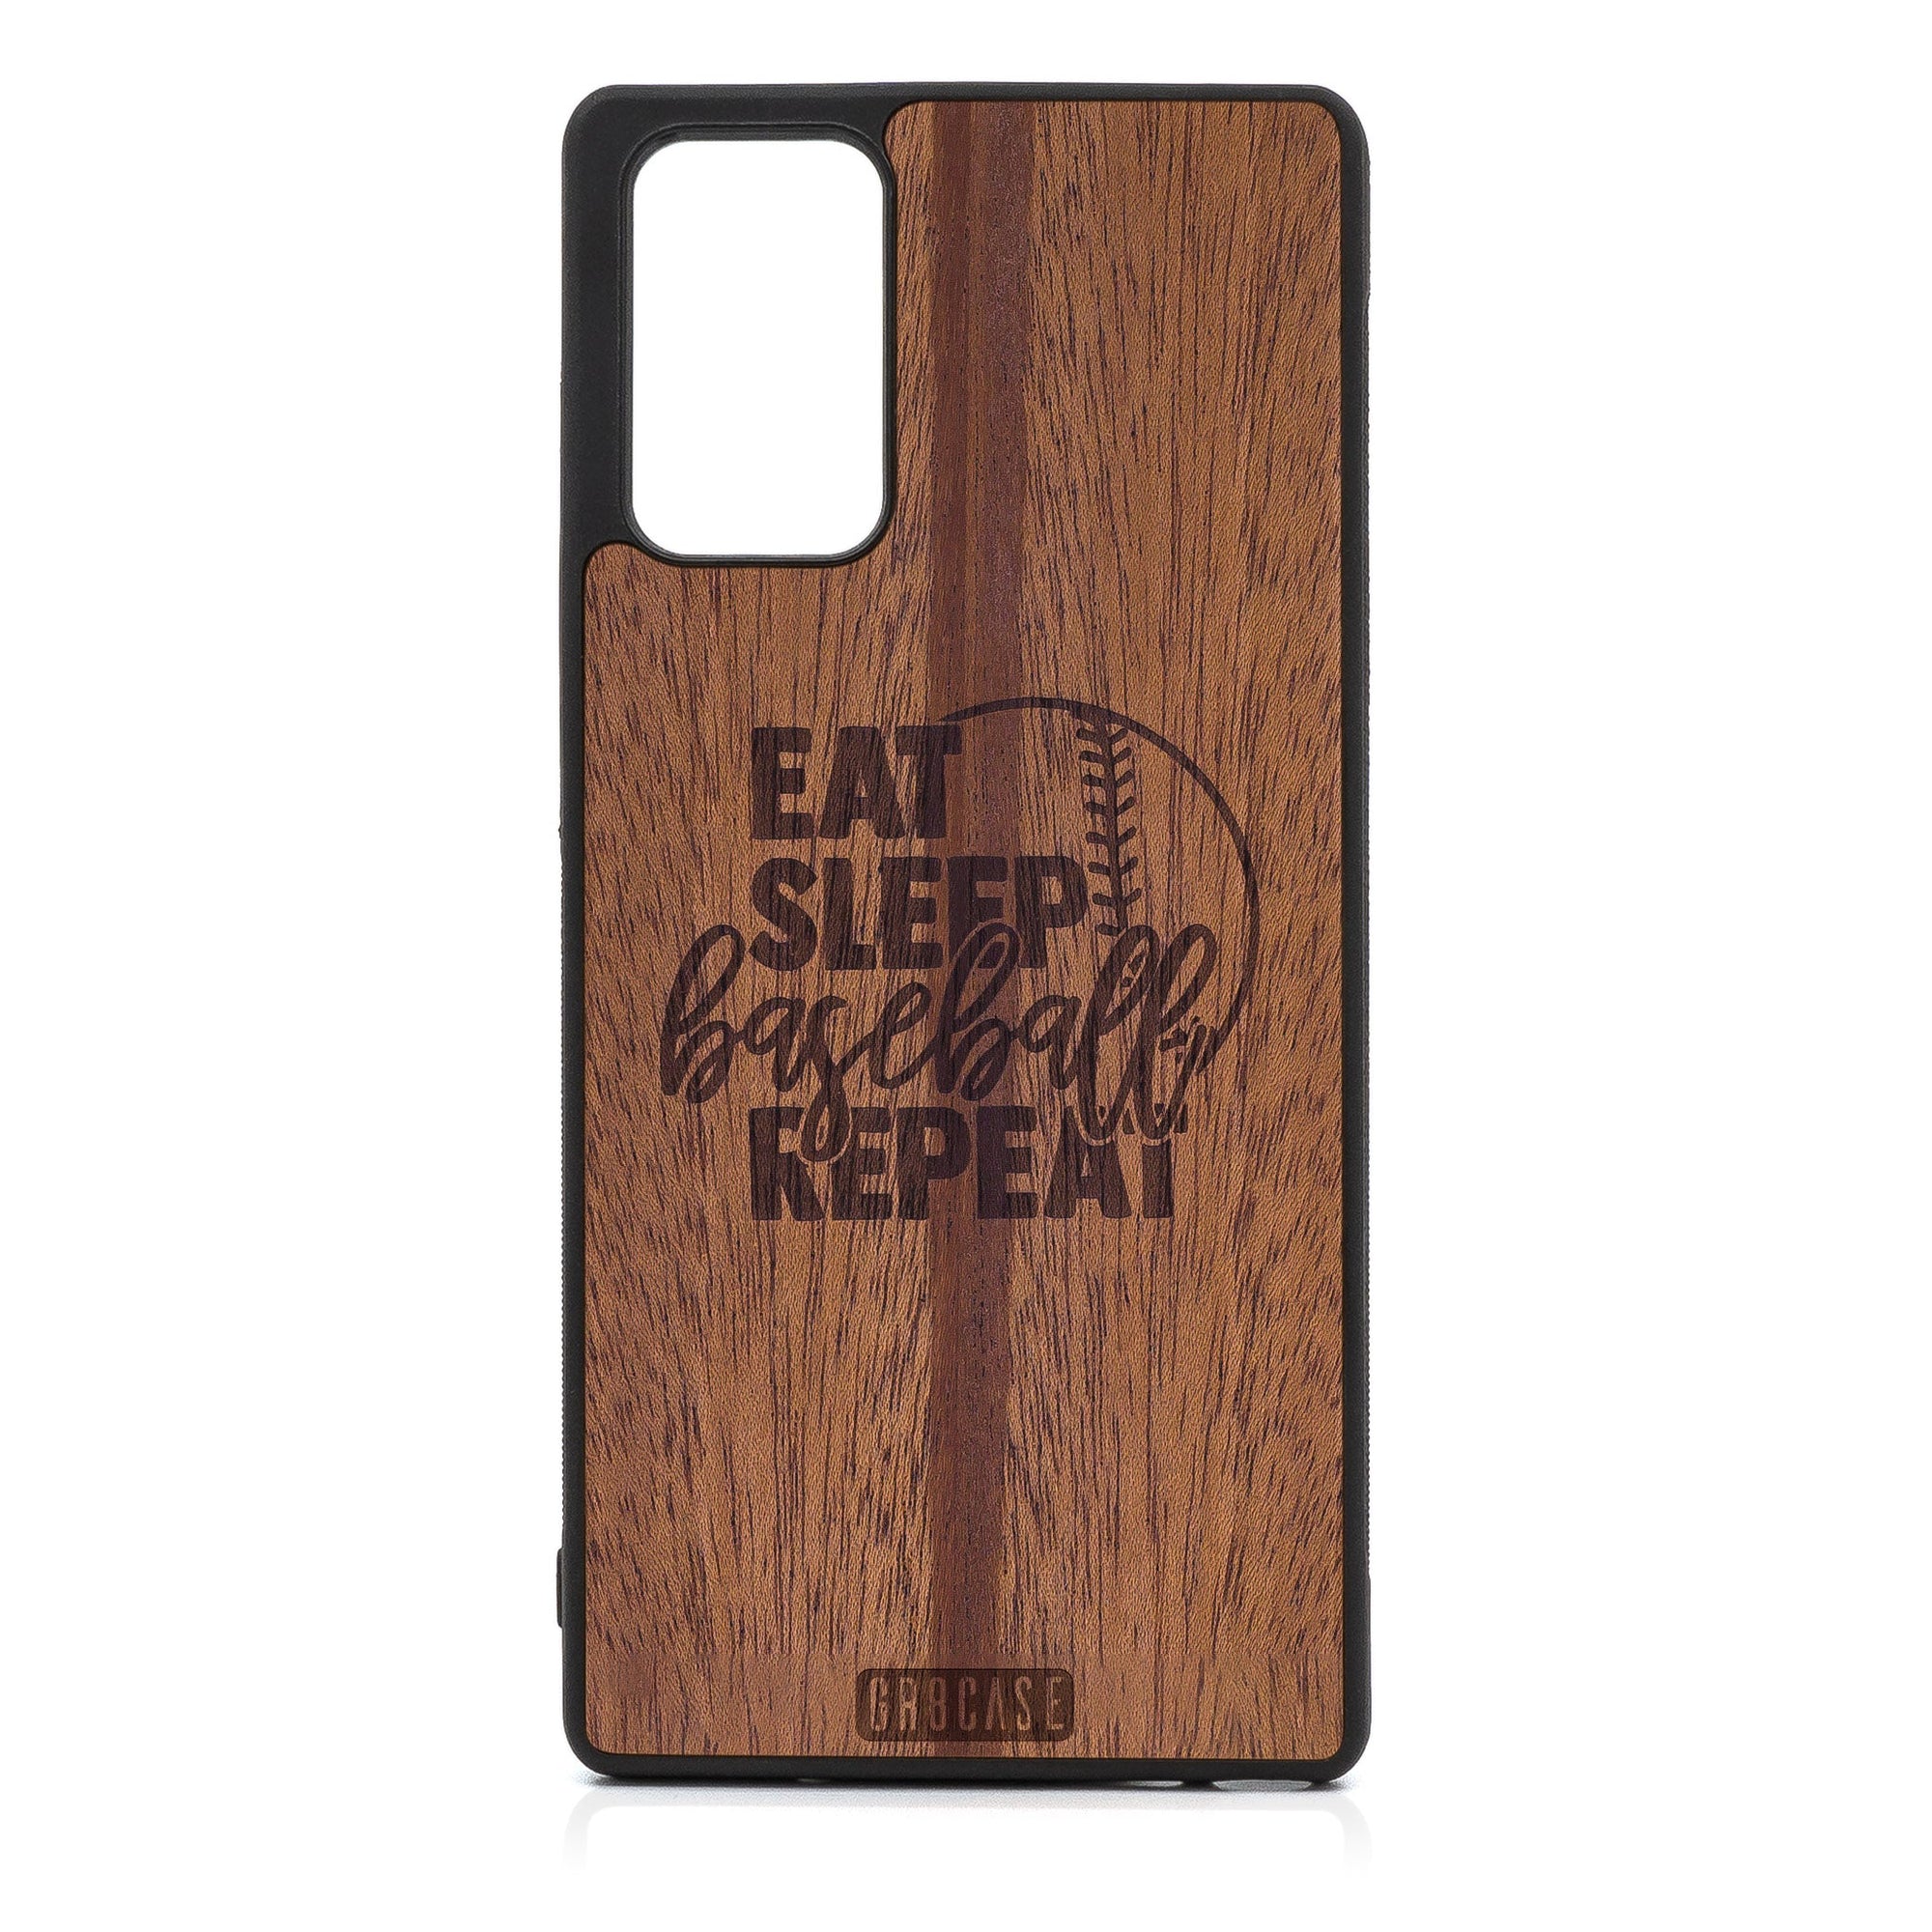 Eat Sleep Baseball Repeat Design Wood Case For Samsung Galaxy A52 5G